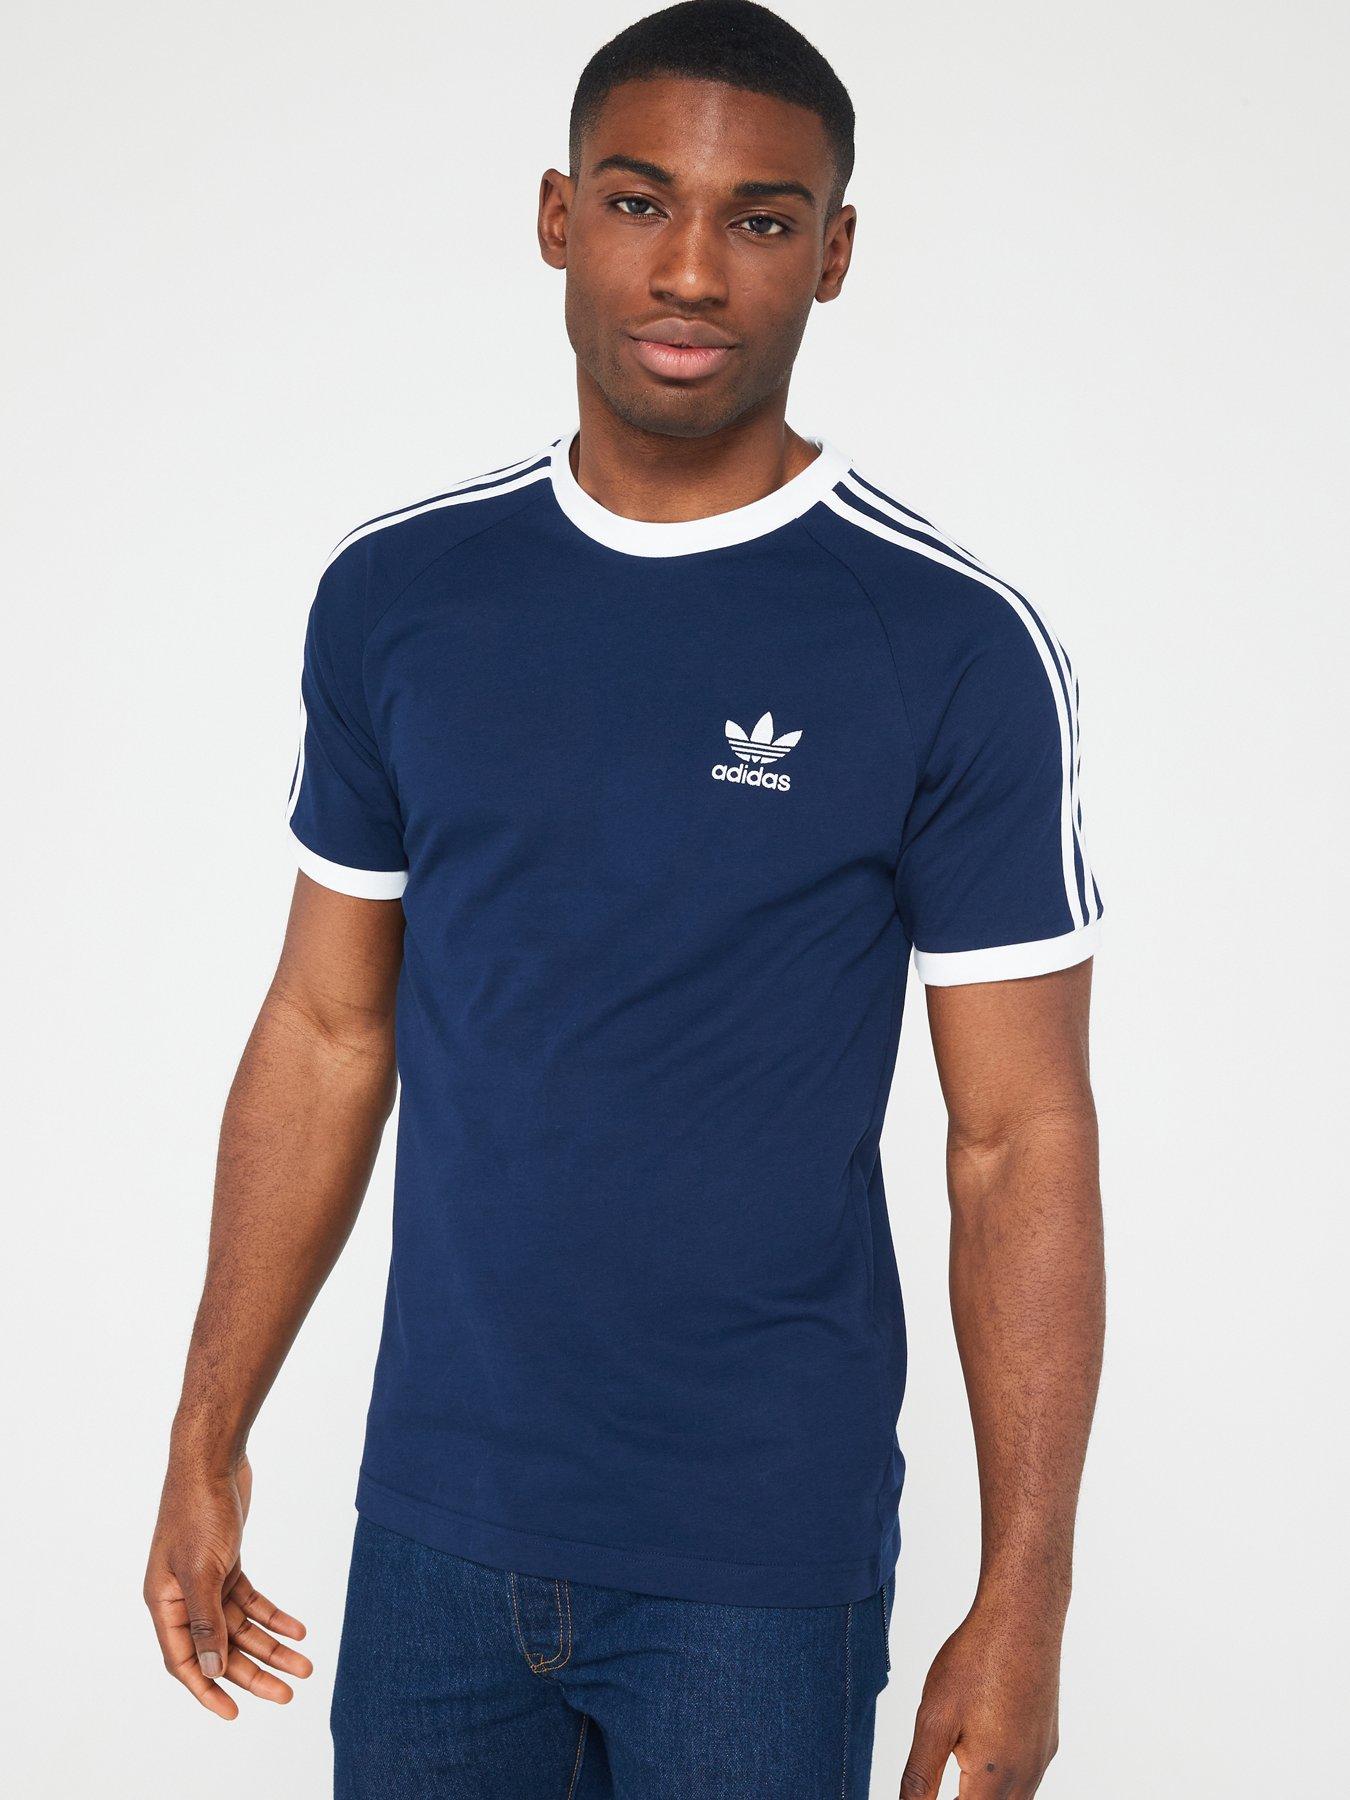 Aeródromo enlace en cualquier momento Blue | T-shirts & polos | Mens sports clothing | Sports & leisure | Adidas  originals | www.very.co.uk